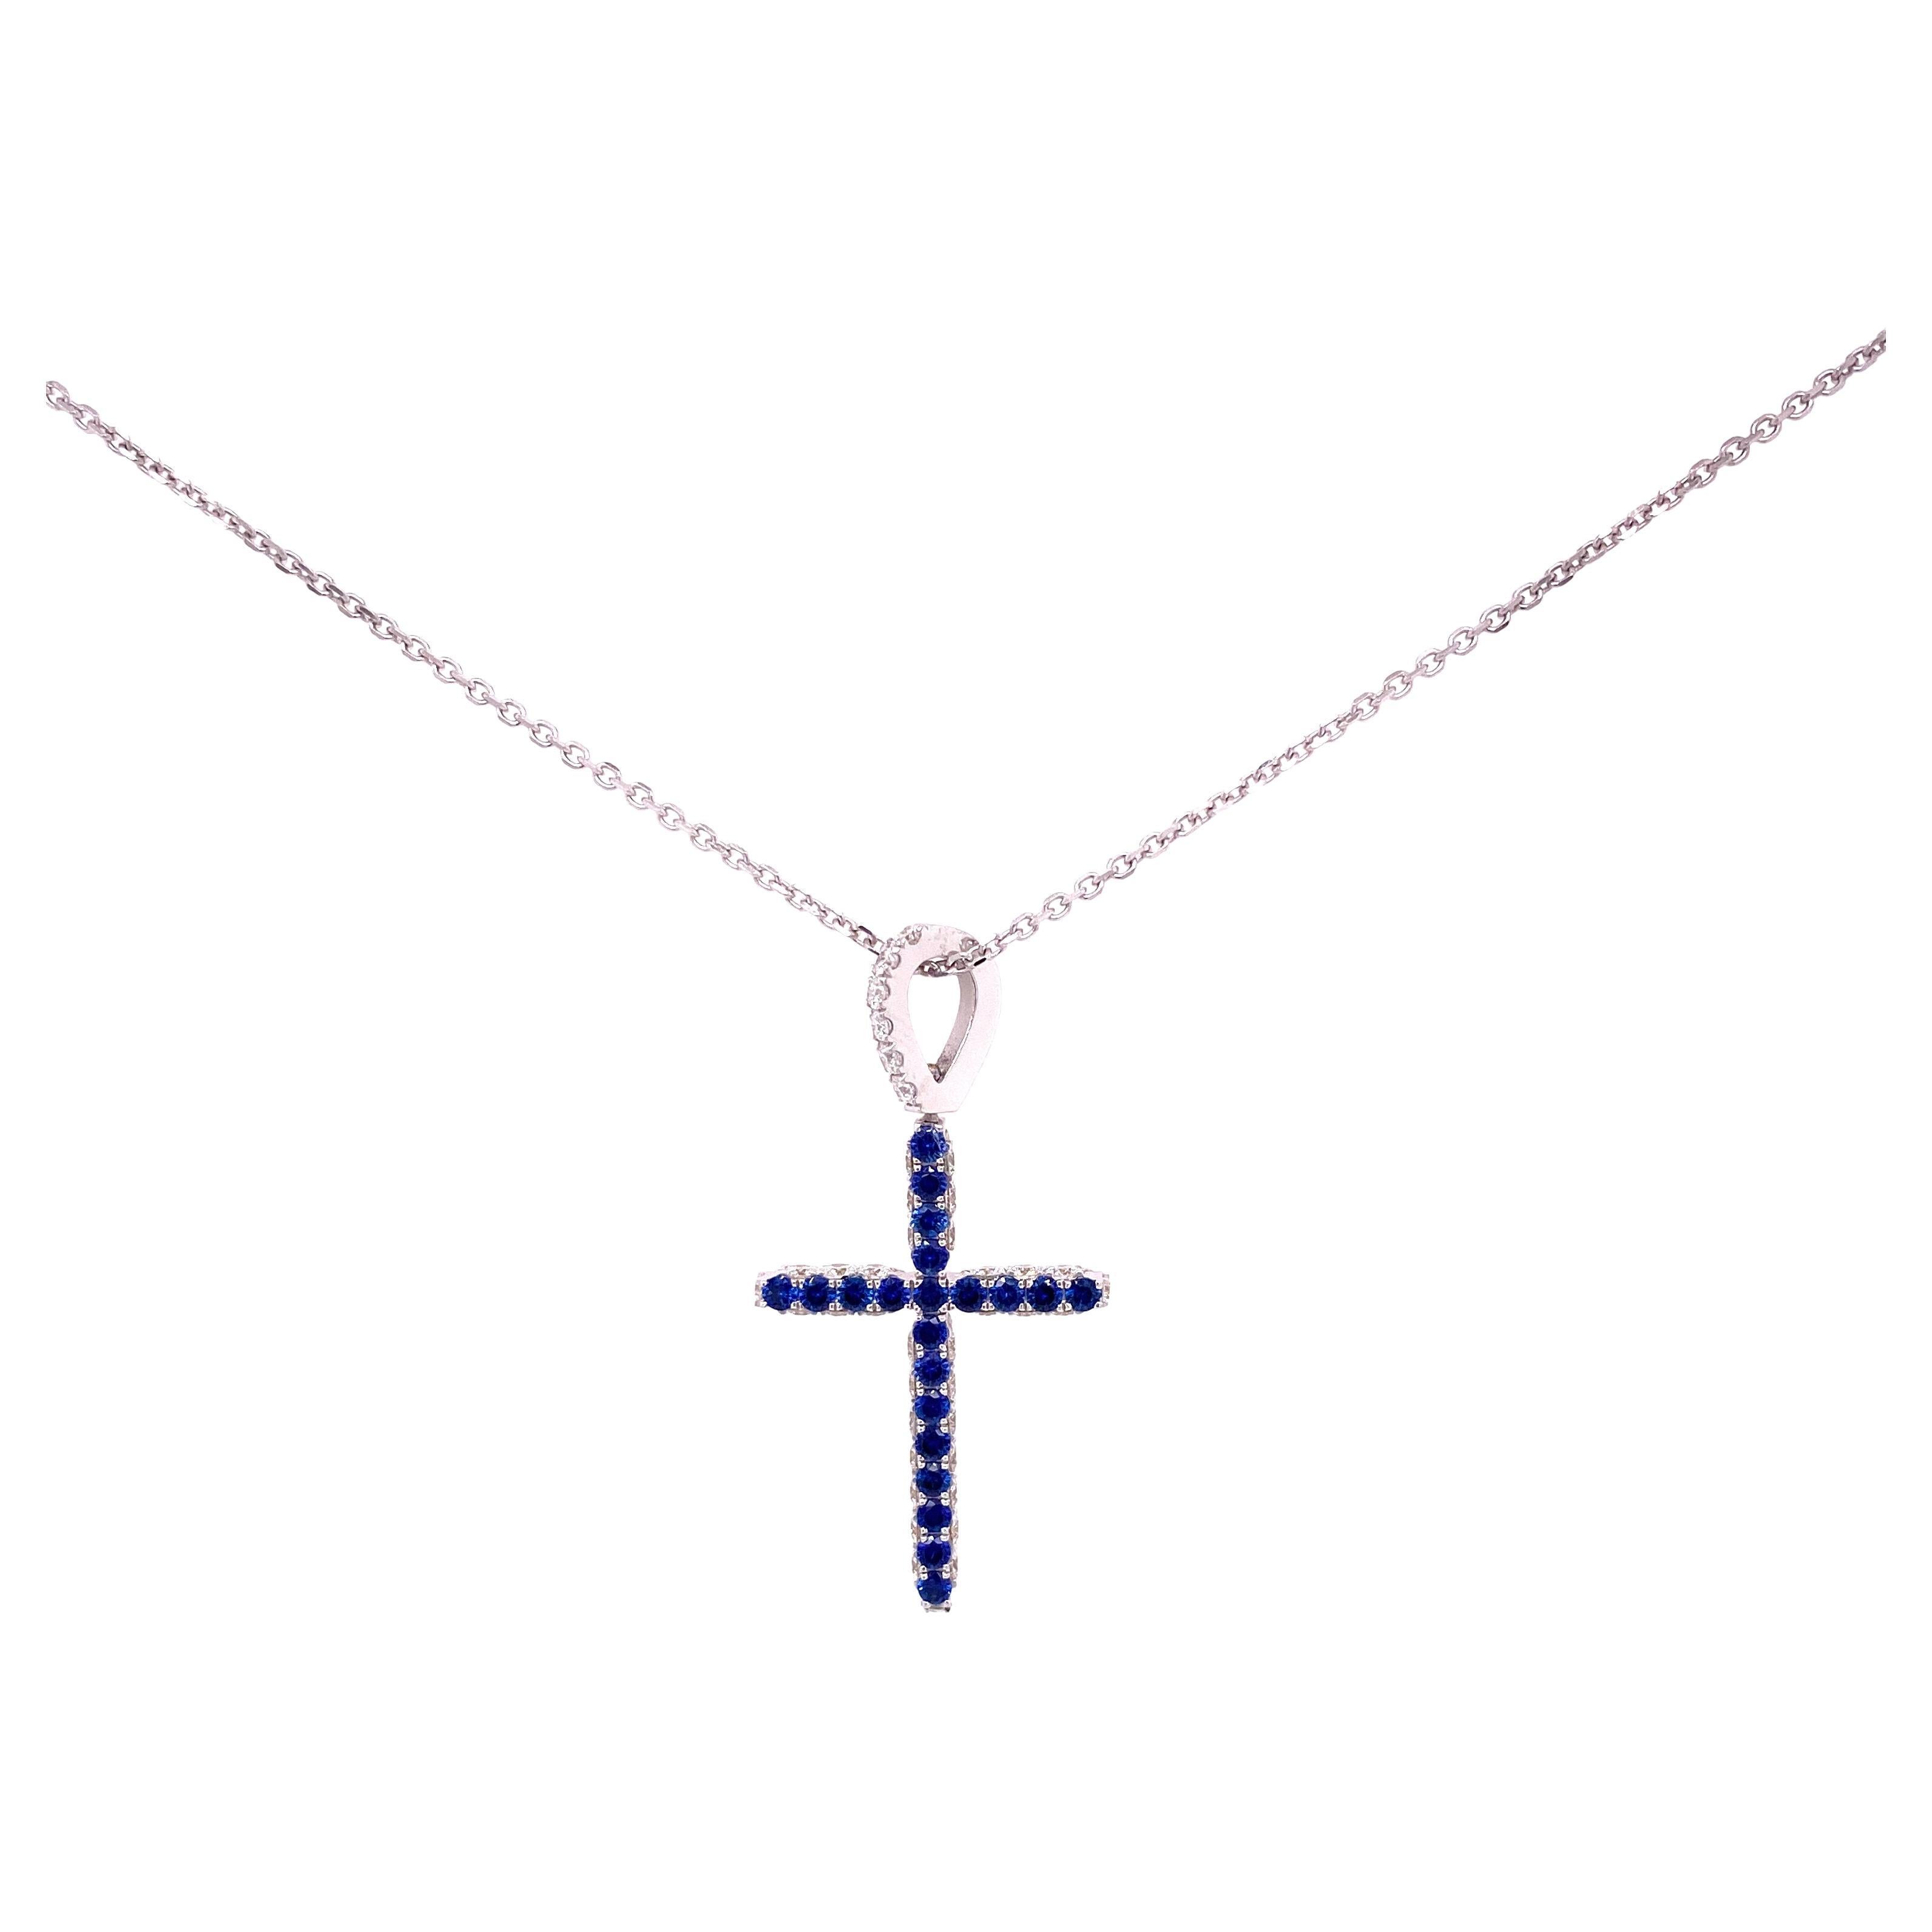 CROSS-4S - 18KW Cross Pendant with Diamonds & Sapphire along with 18KW 16” Chain